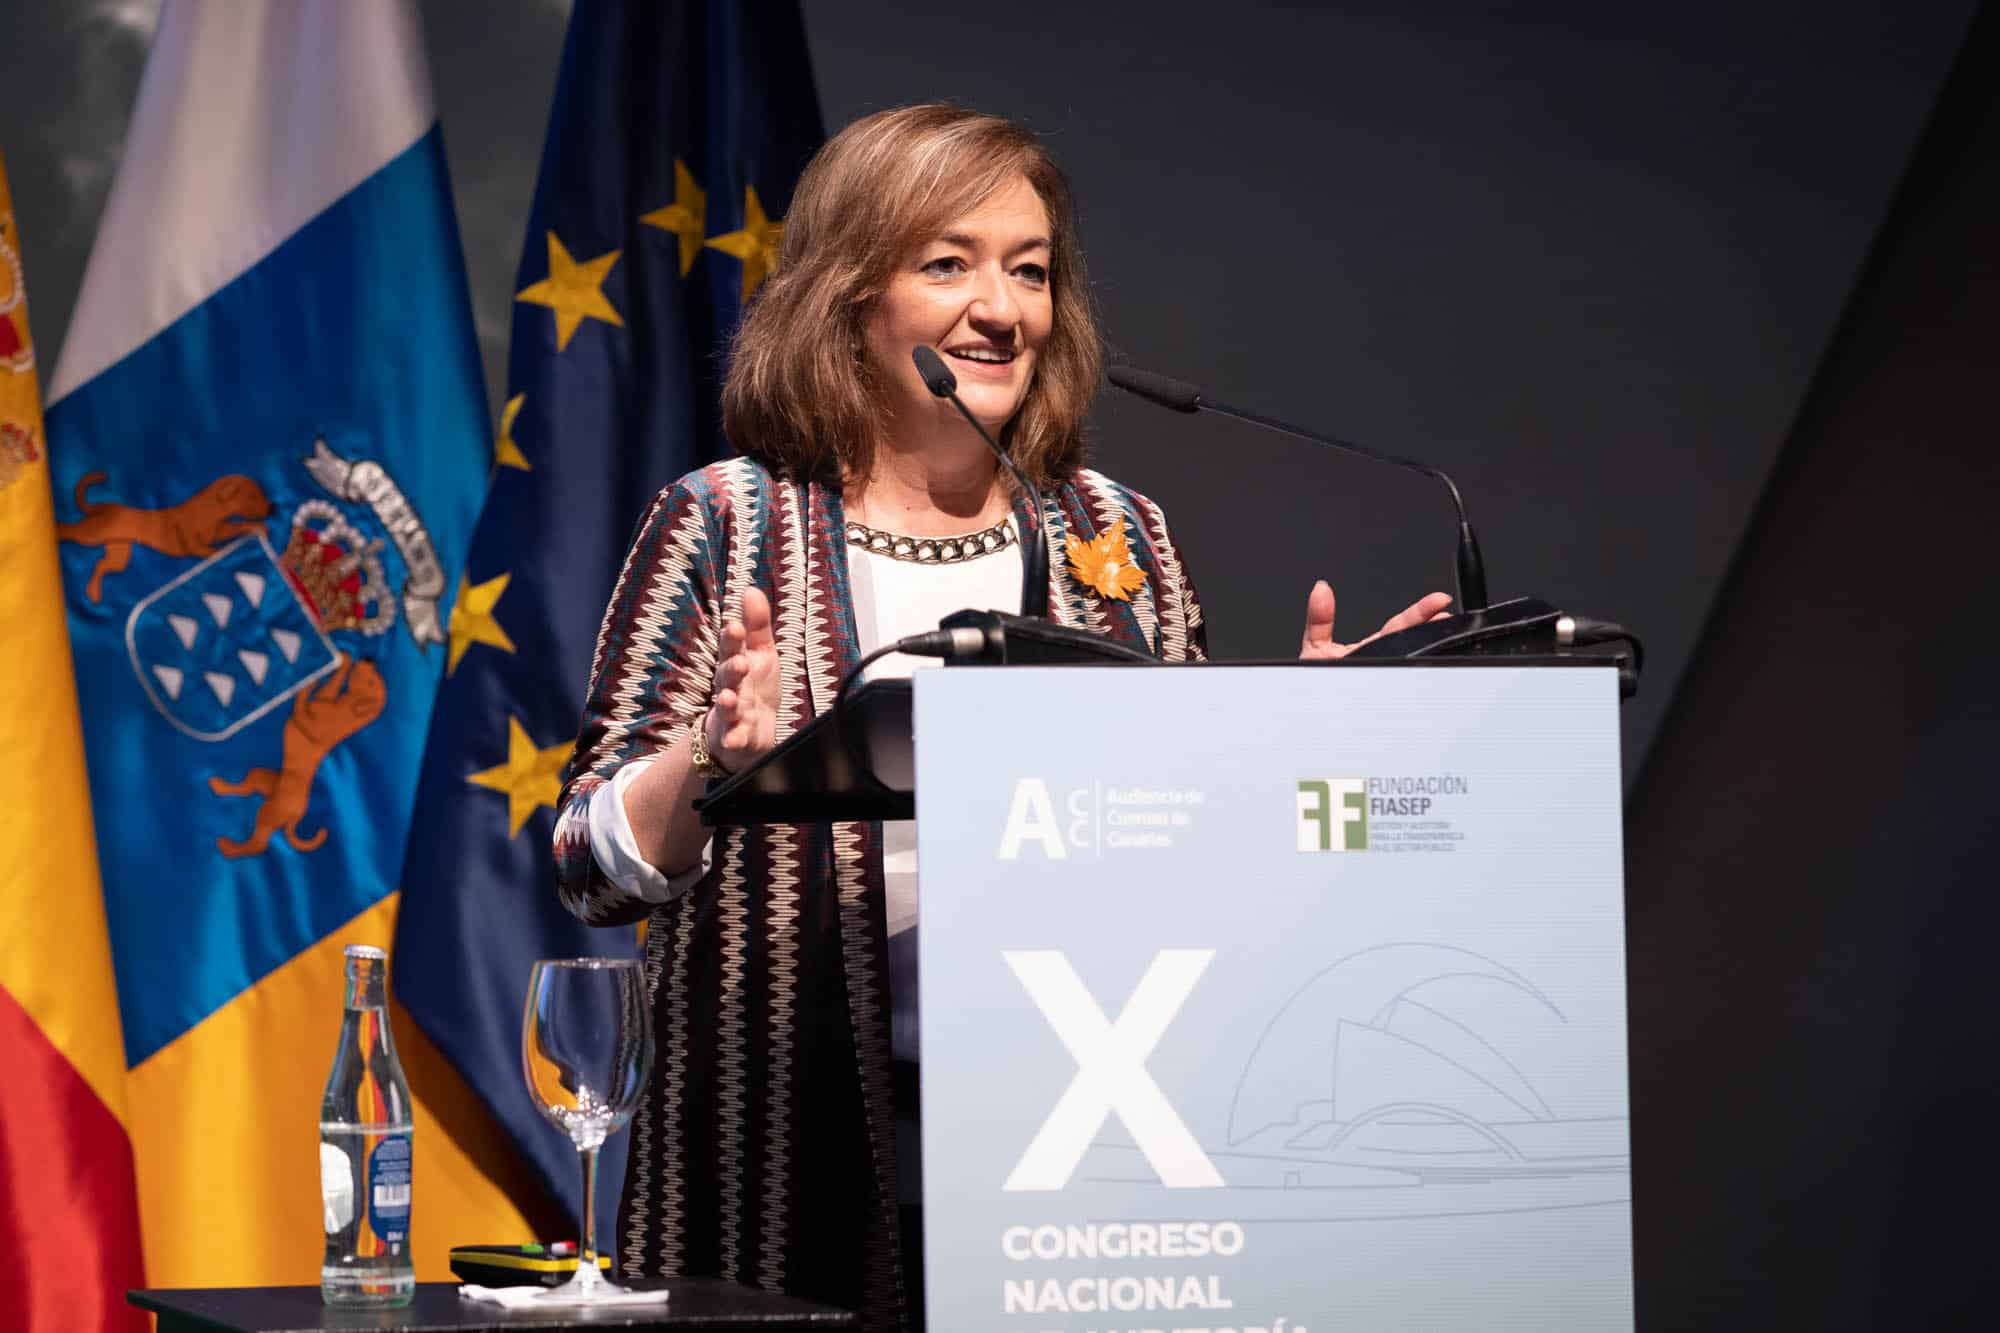 X Congreso Nacional de Auditorias - Cristina Herrero